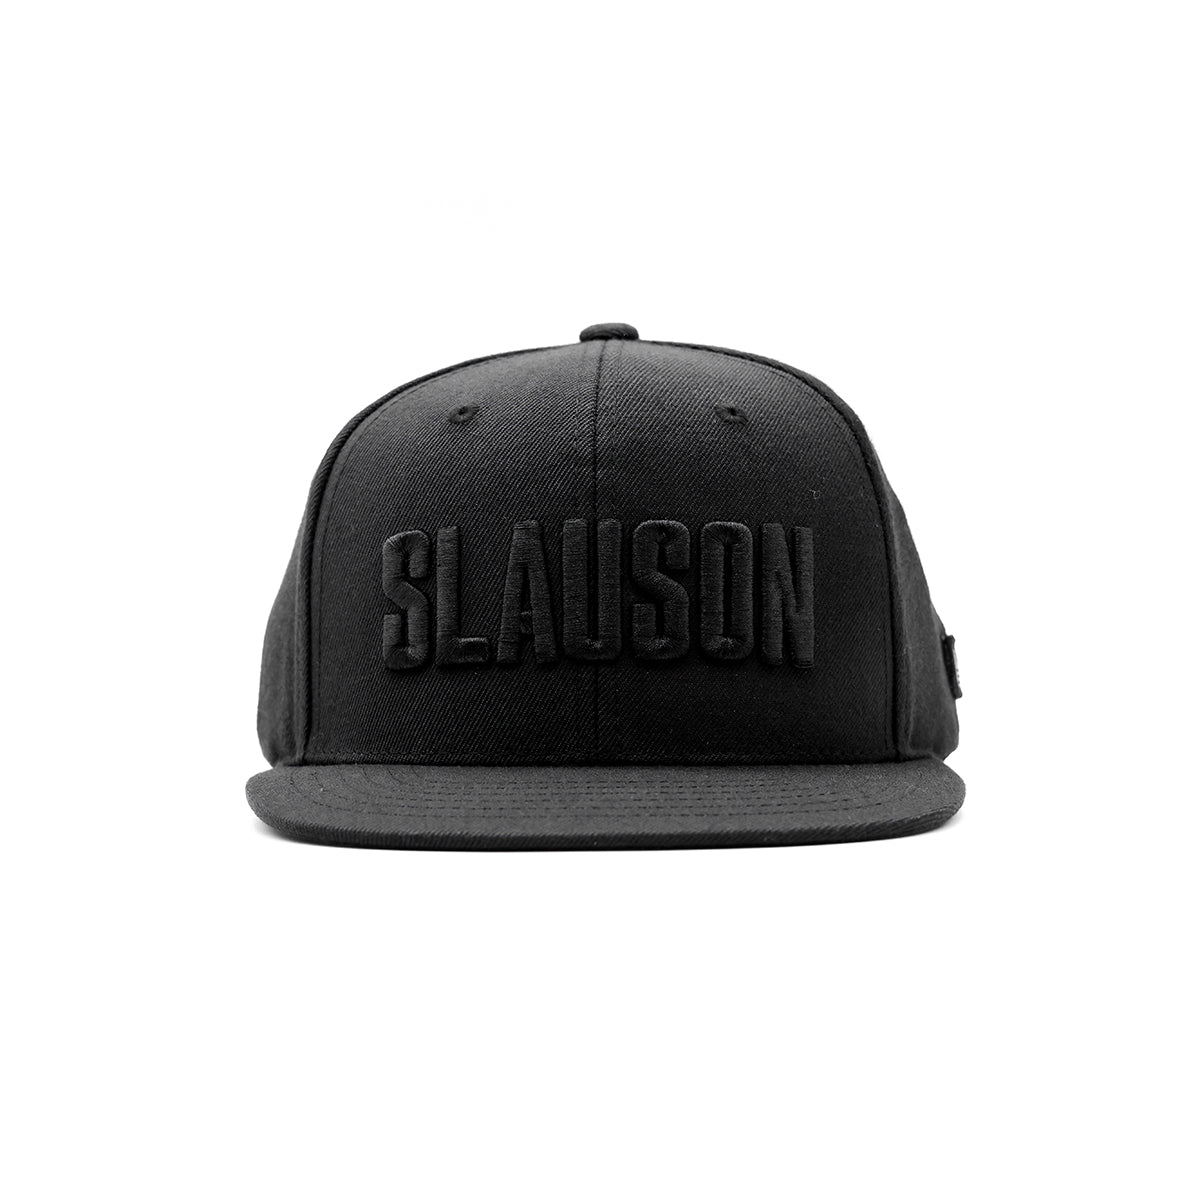 Slauson (Block Logo) Limited Edition Snapback - Black/Black - Front